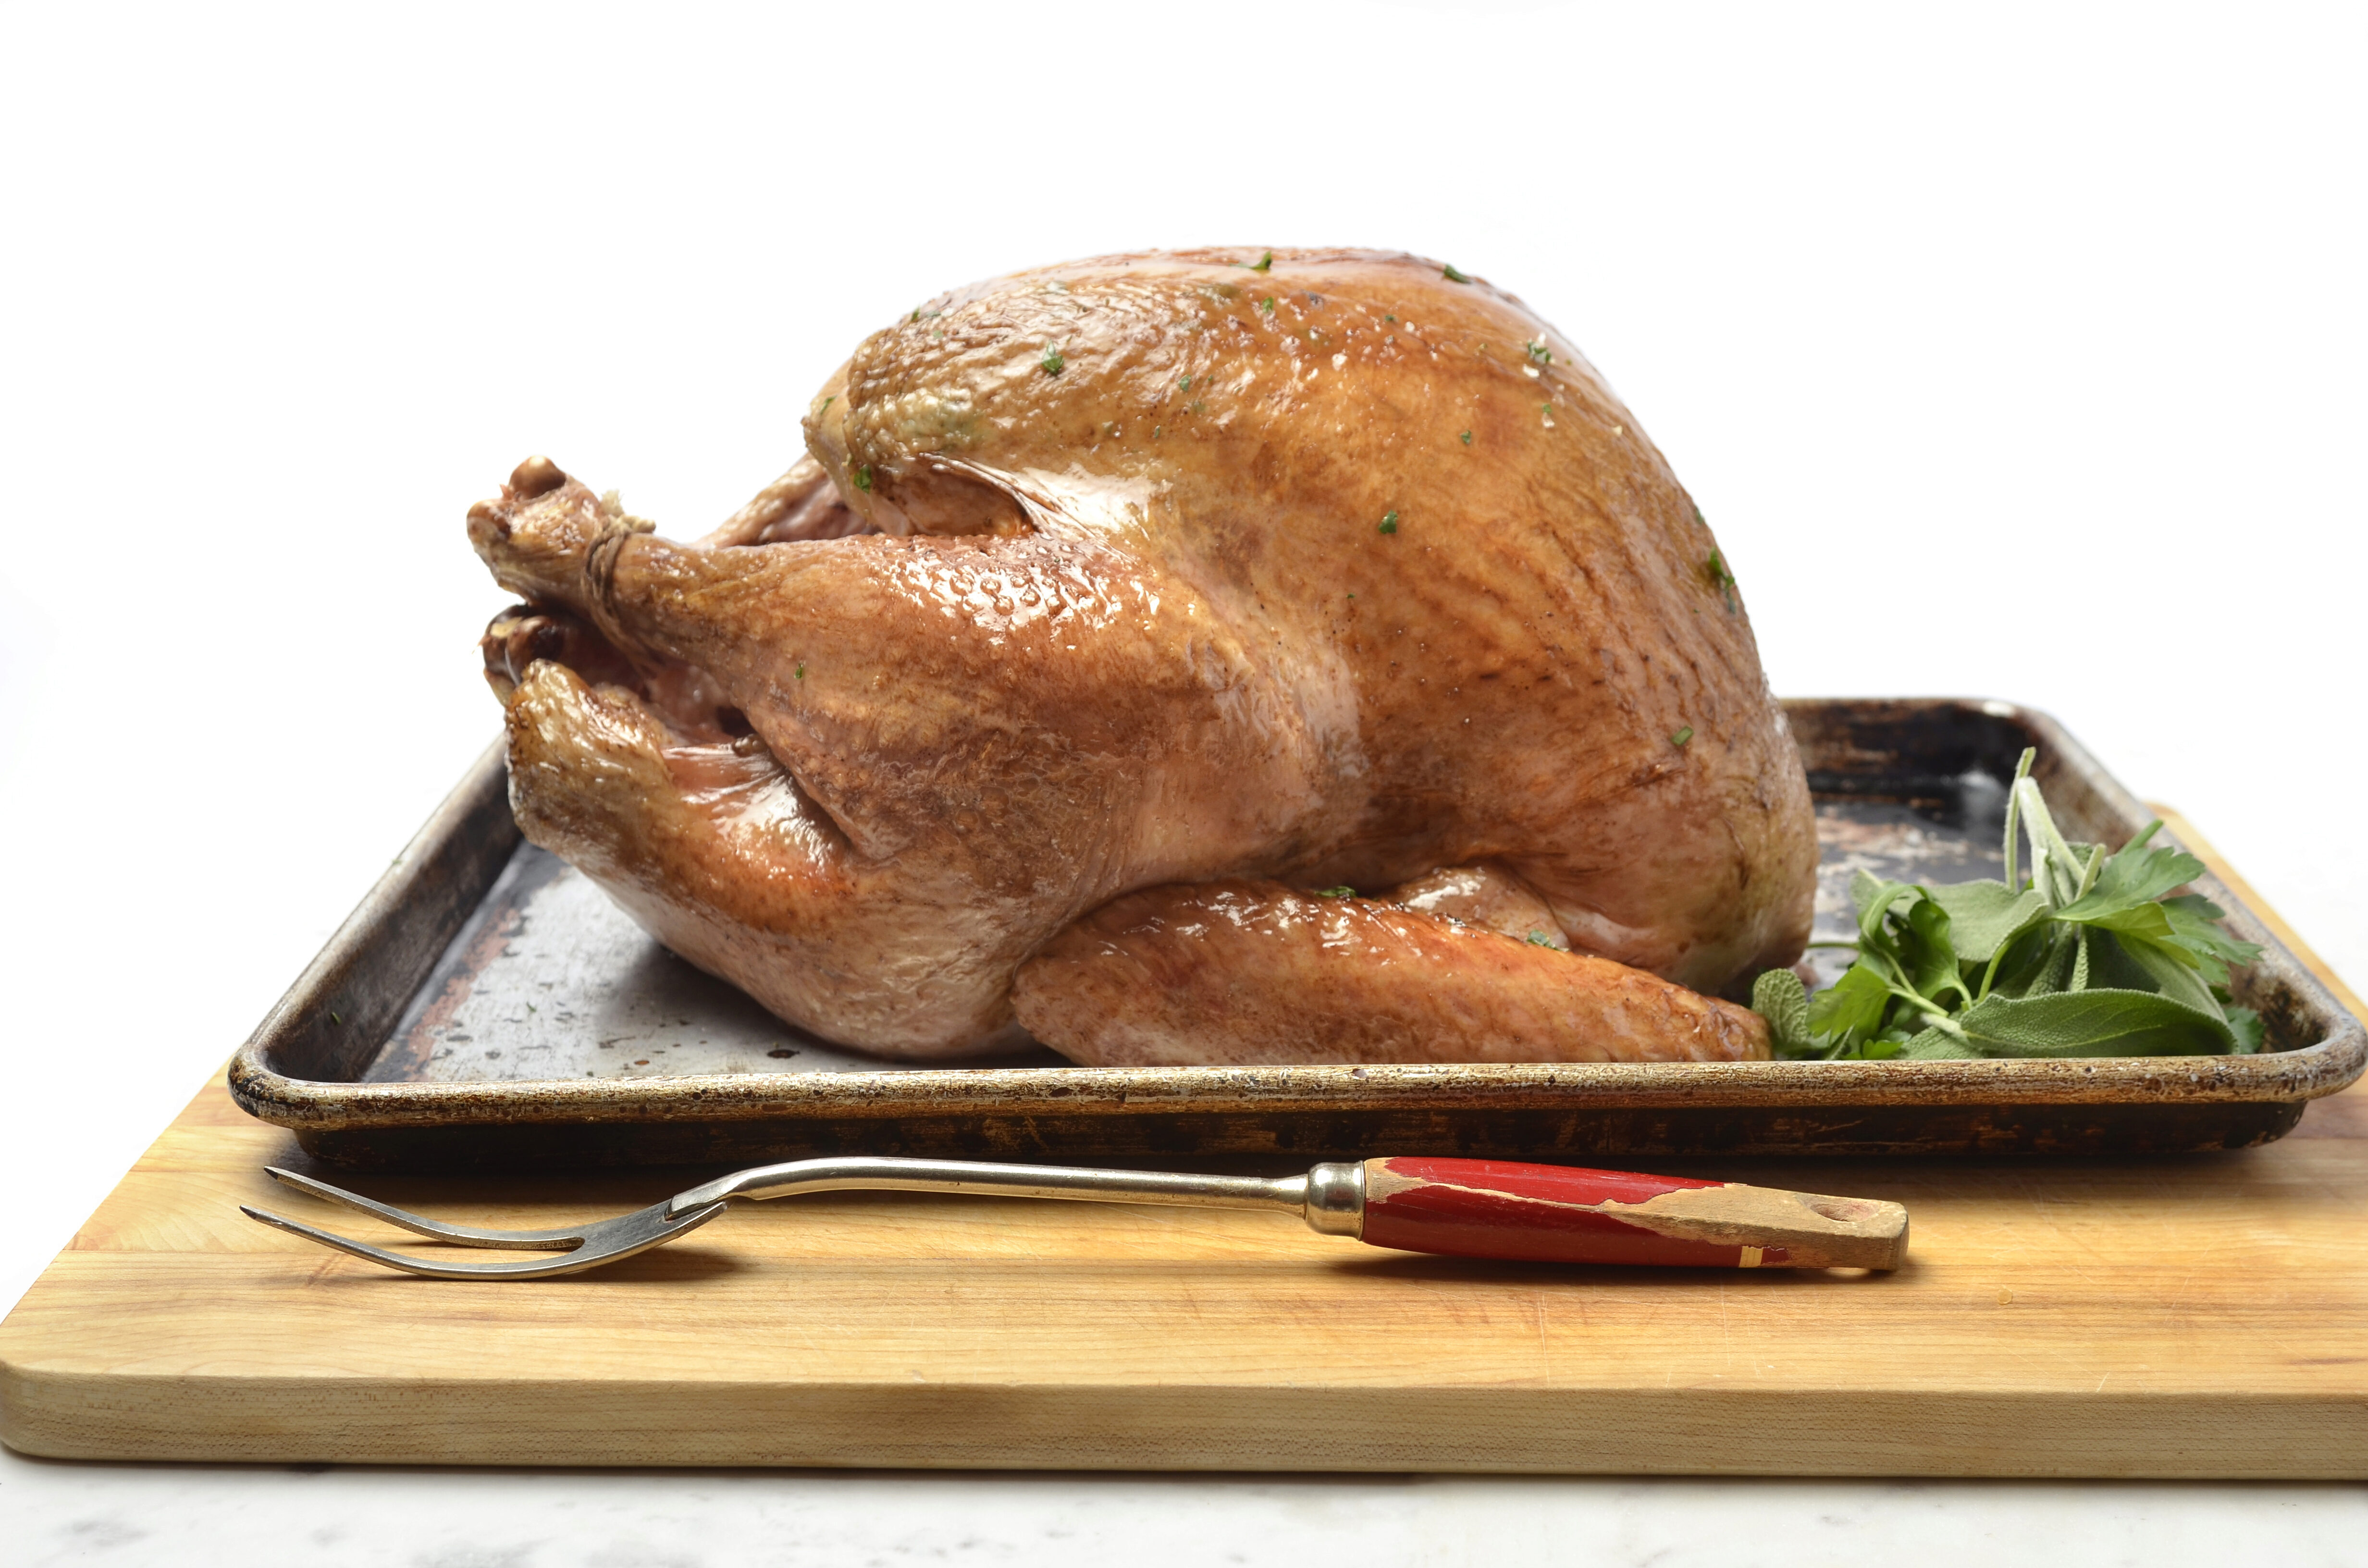 Thawing a Whole Turkey | Canadian Turkey Does A Frozen Turkey Weigh More Than A Thawed Turkey